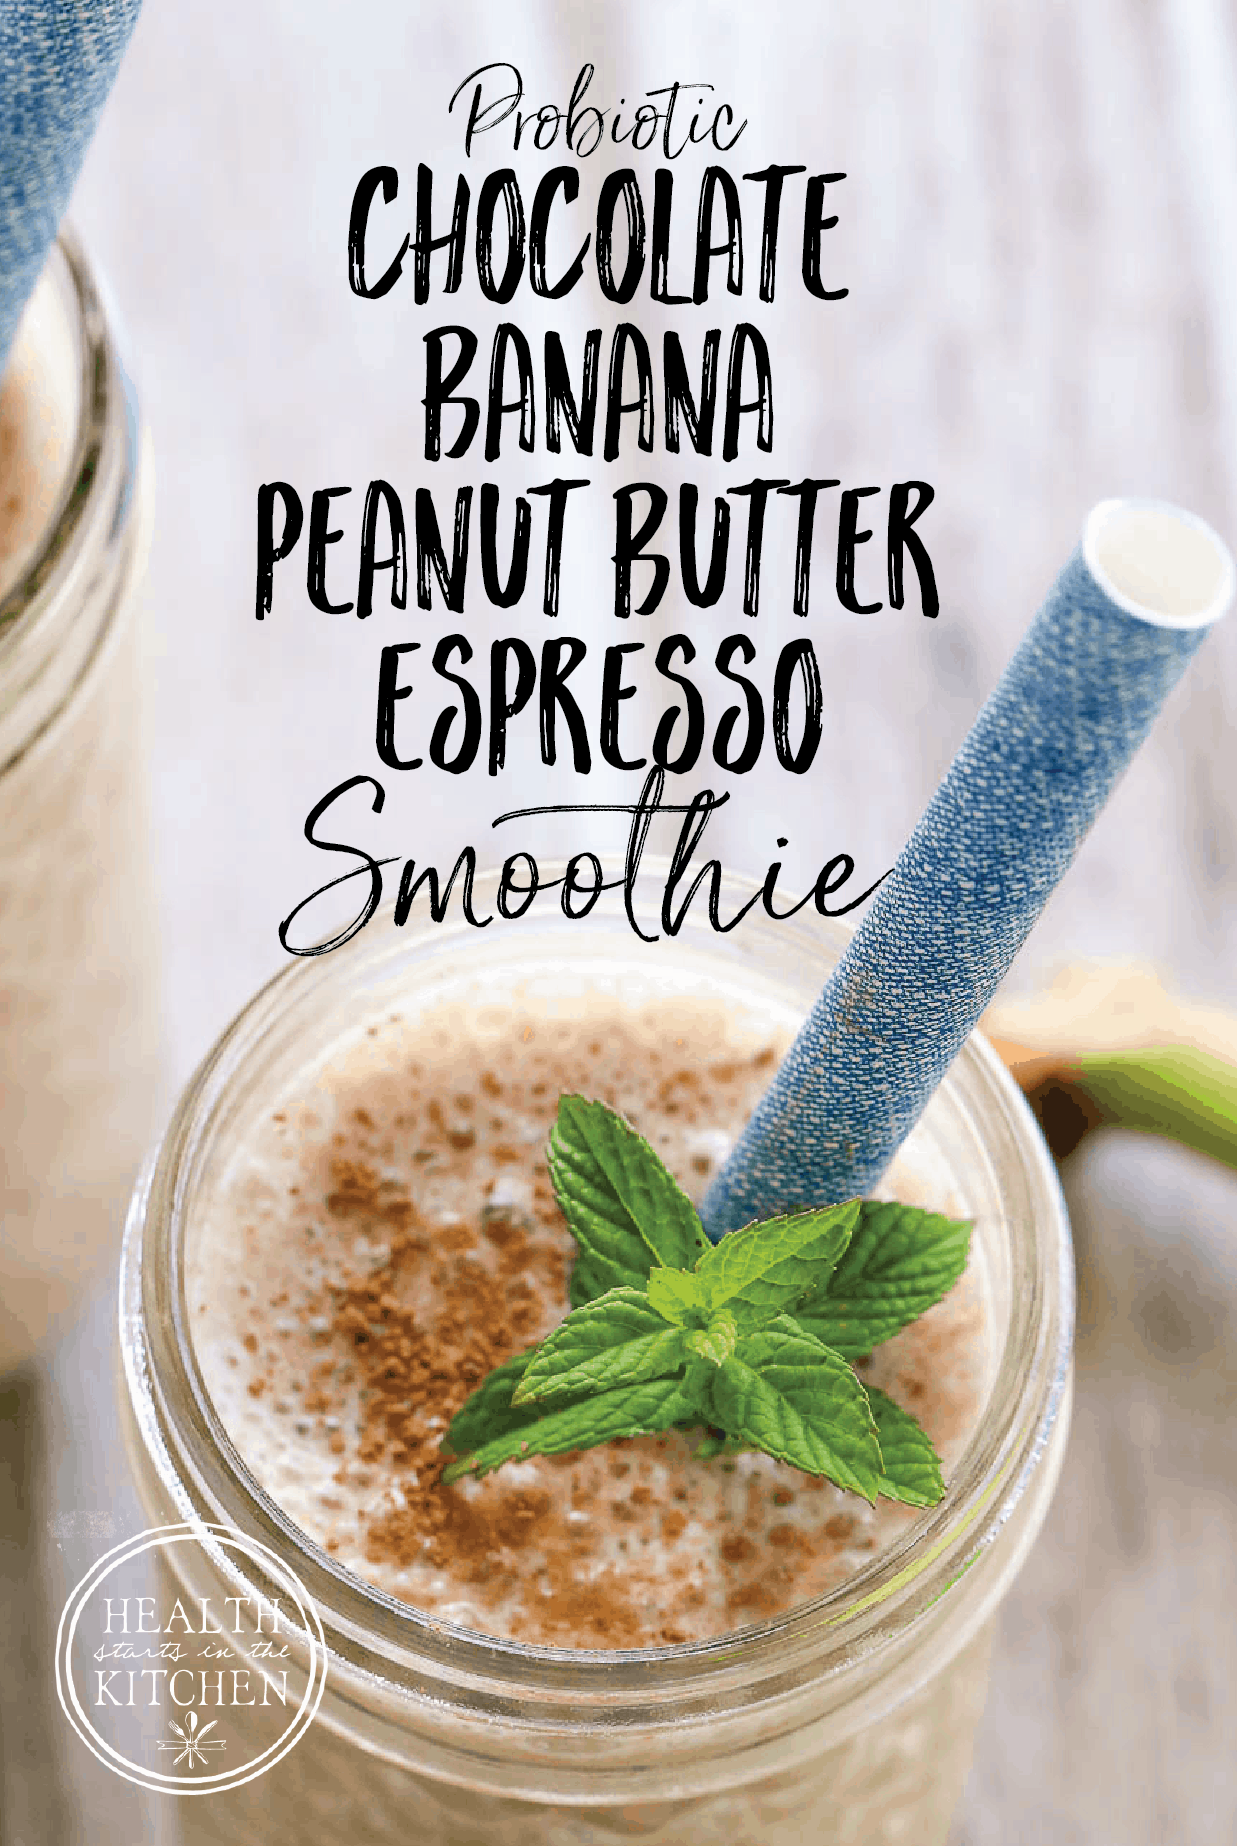 Probiotic Chocolate Peanut Butter Banana Espresso Breakfast Smoothie